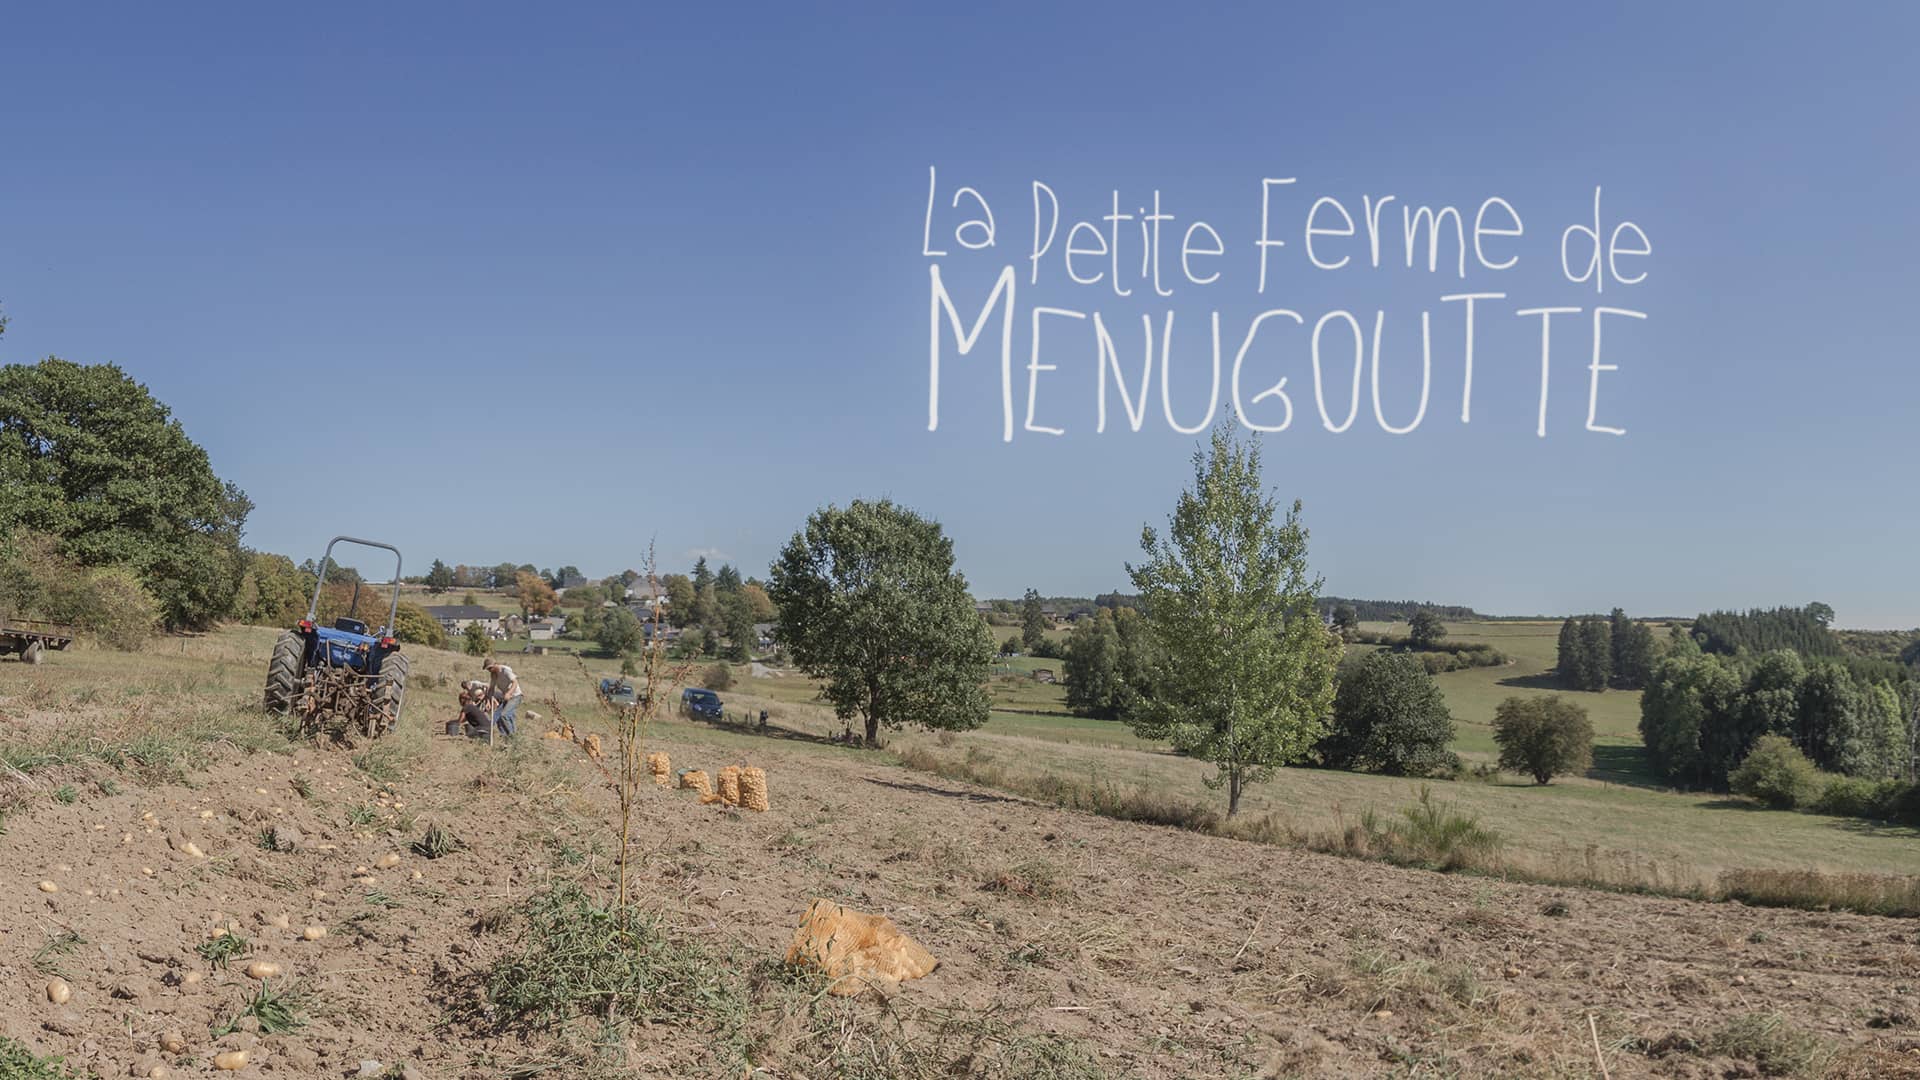 La Petite Ferme de Menugoutte on Vimeo